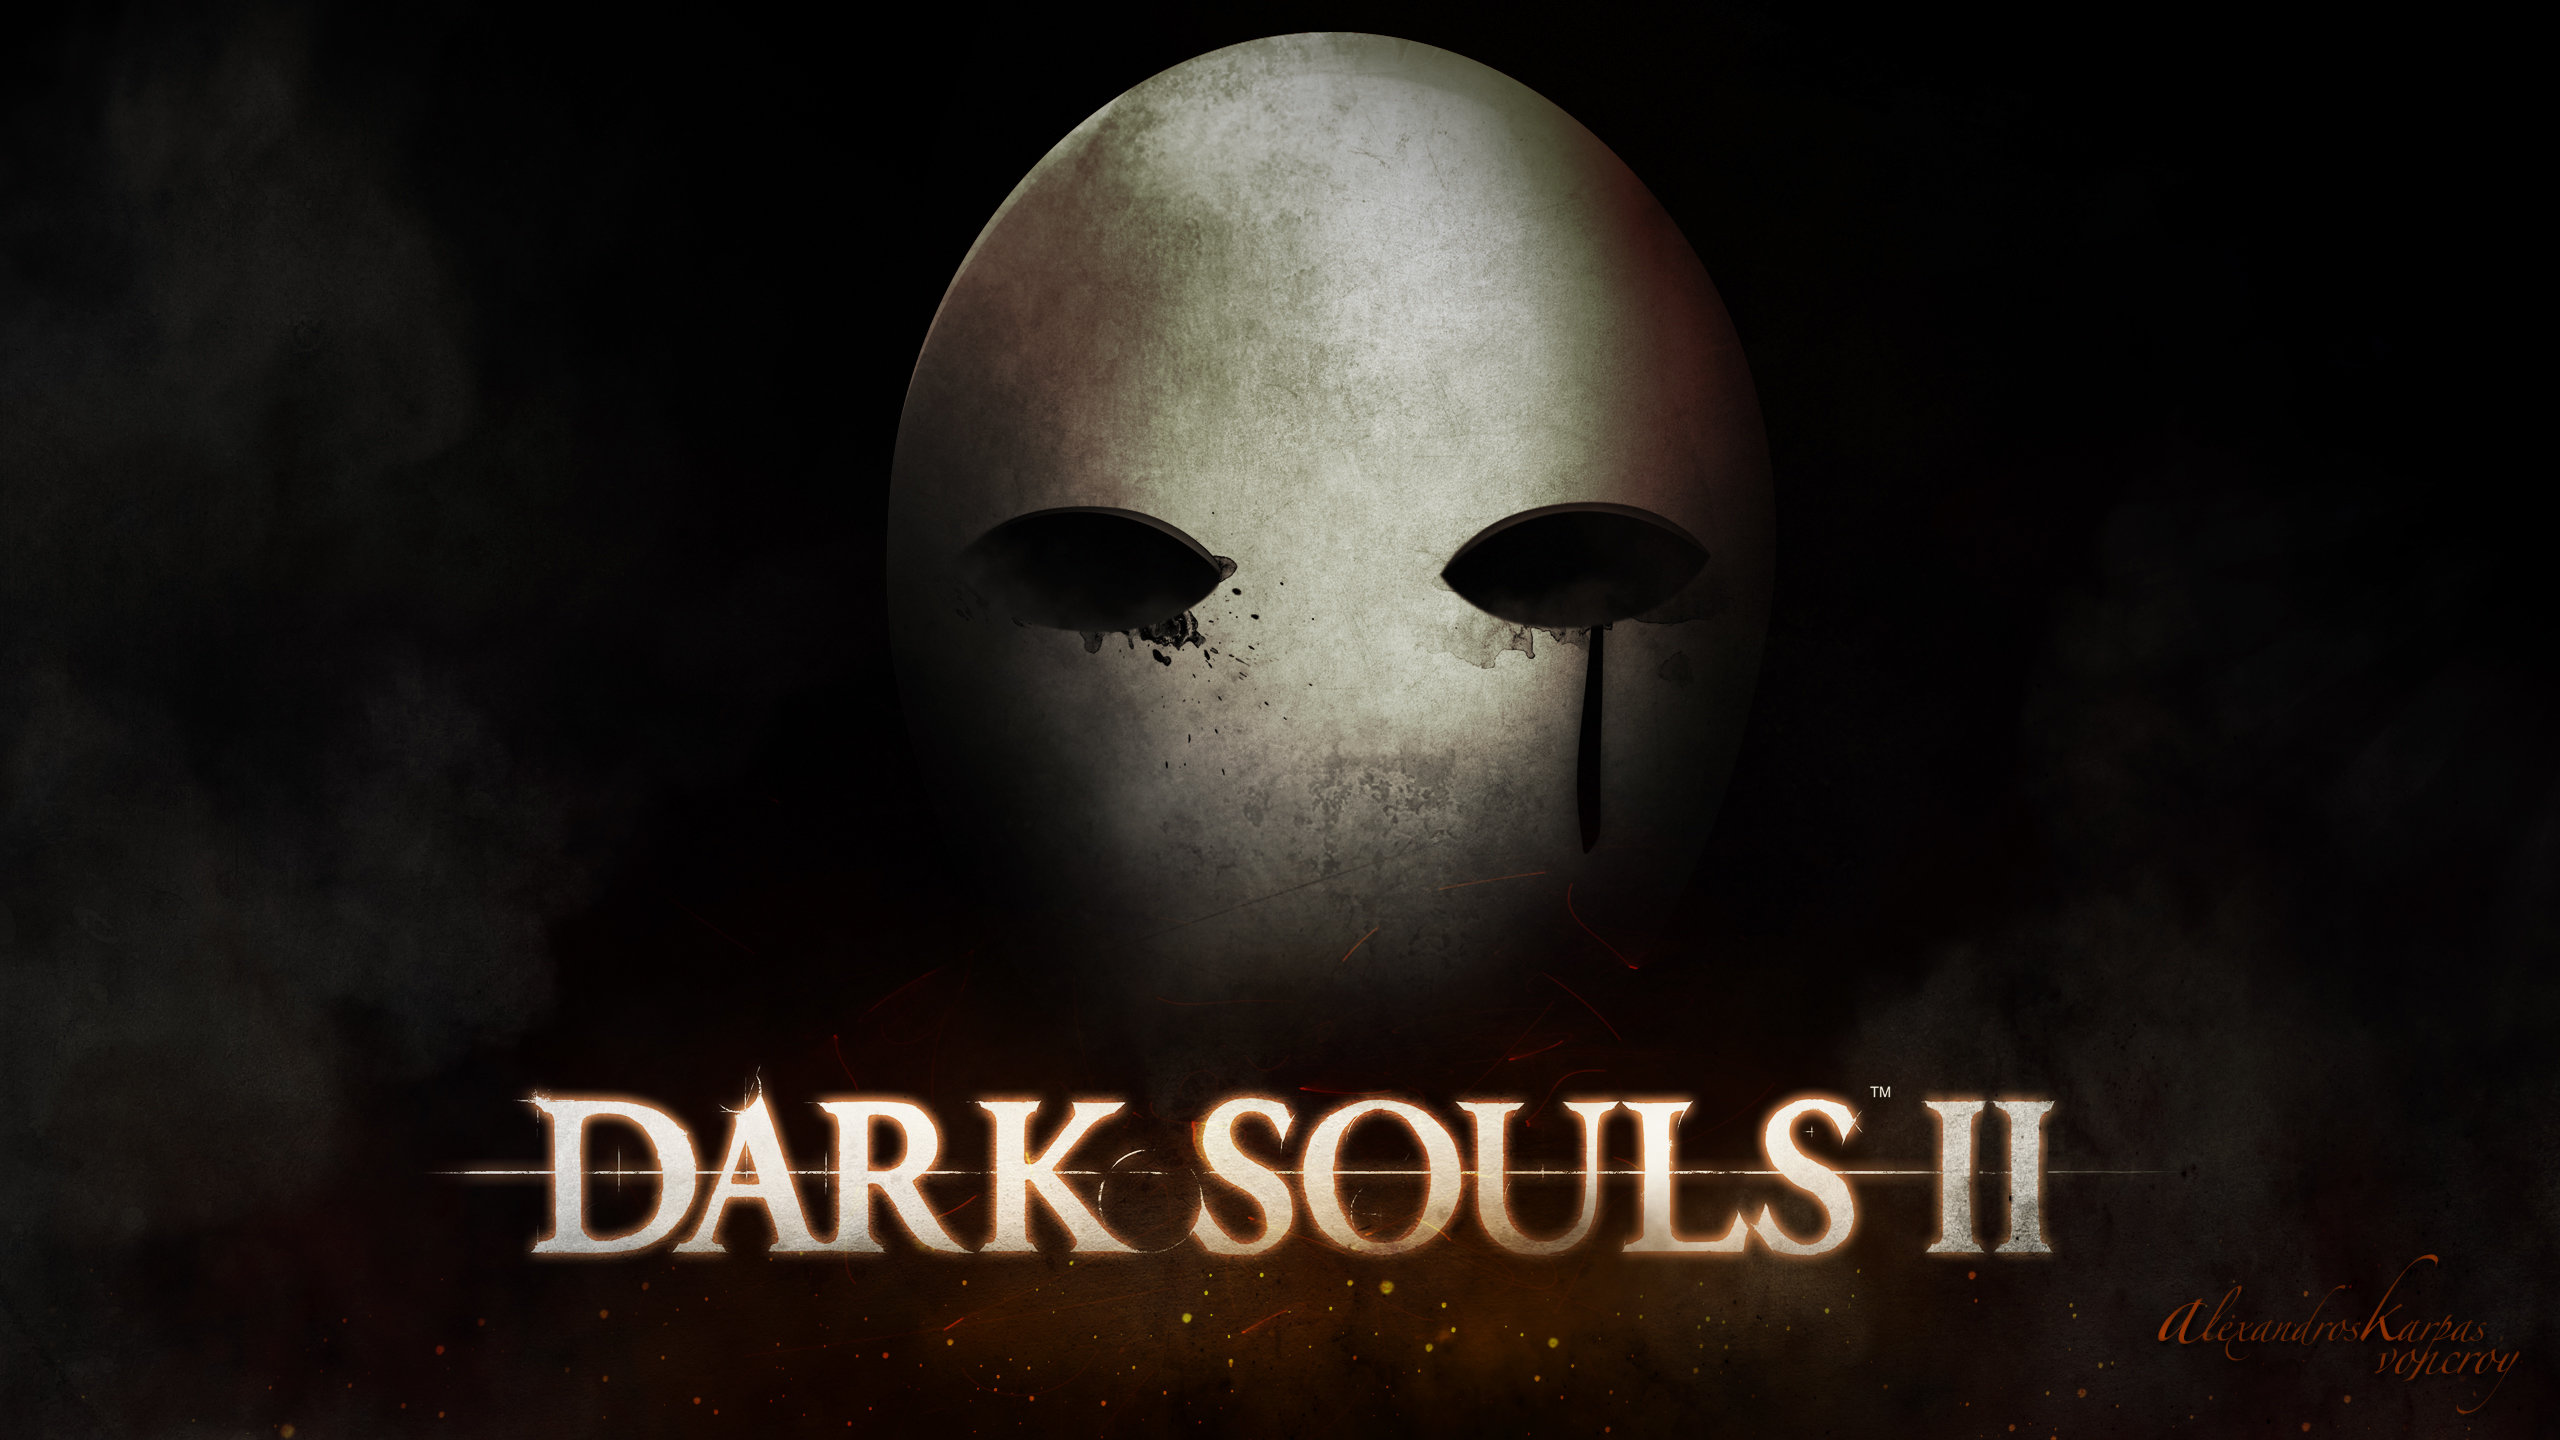 Free download Dark Souls 2 wallpaper ID:10987 hd 2560x1440 for computer